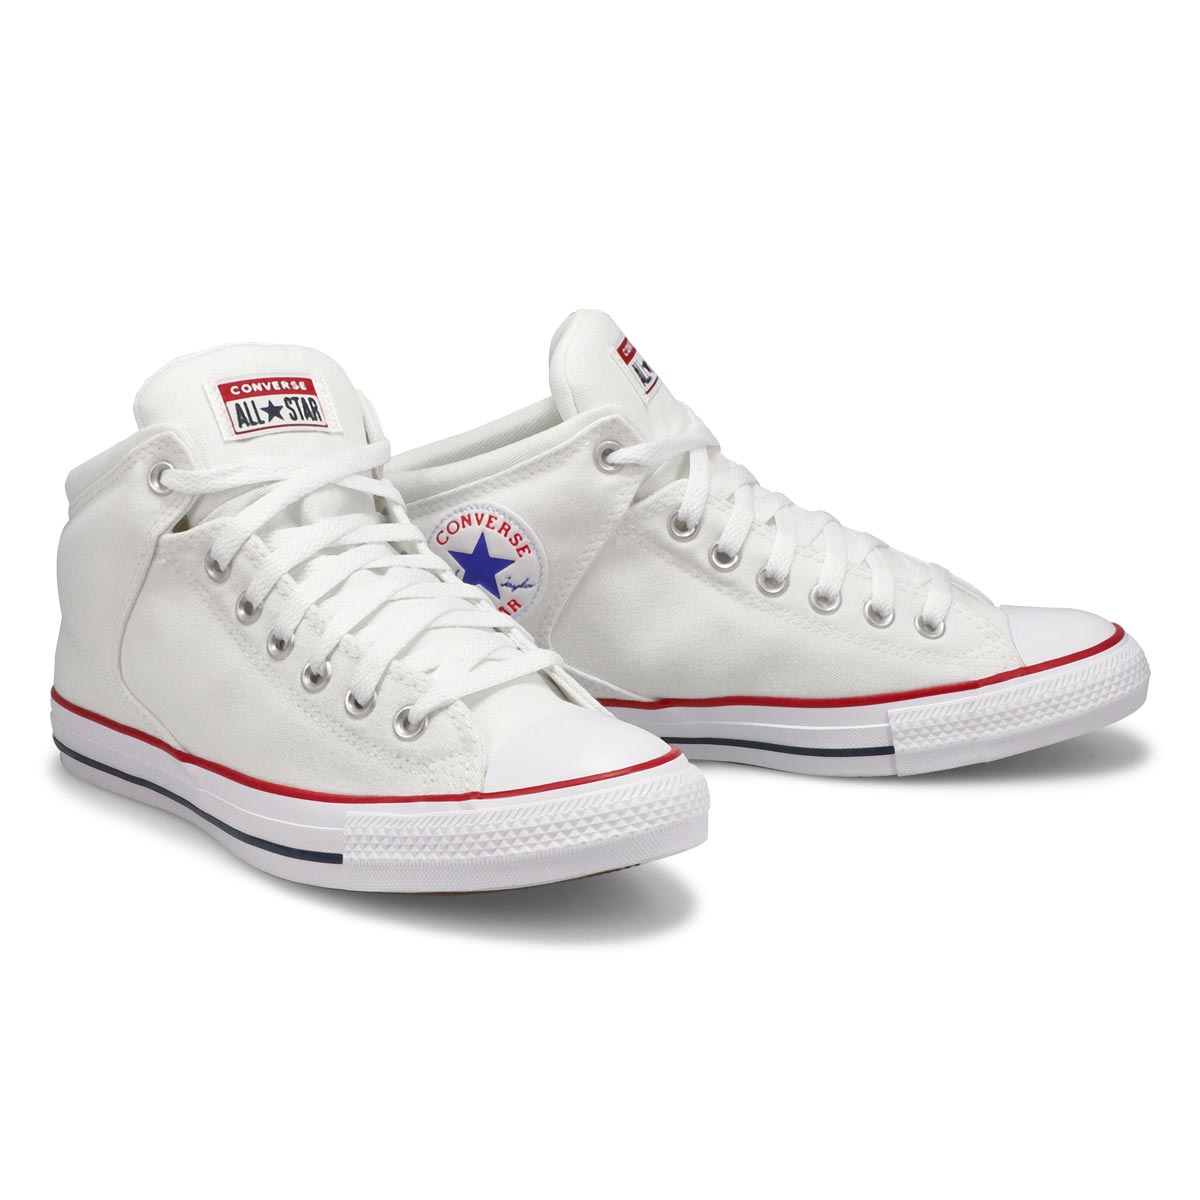 Men's Chuck Taylor All Star High Street Sneaker - White/Red